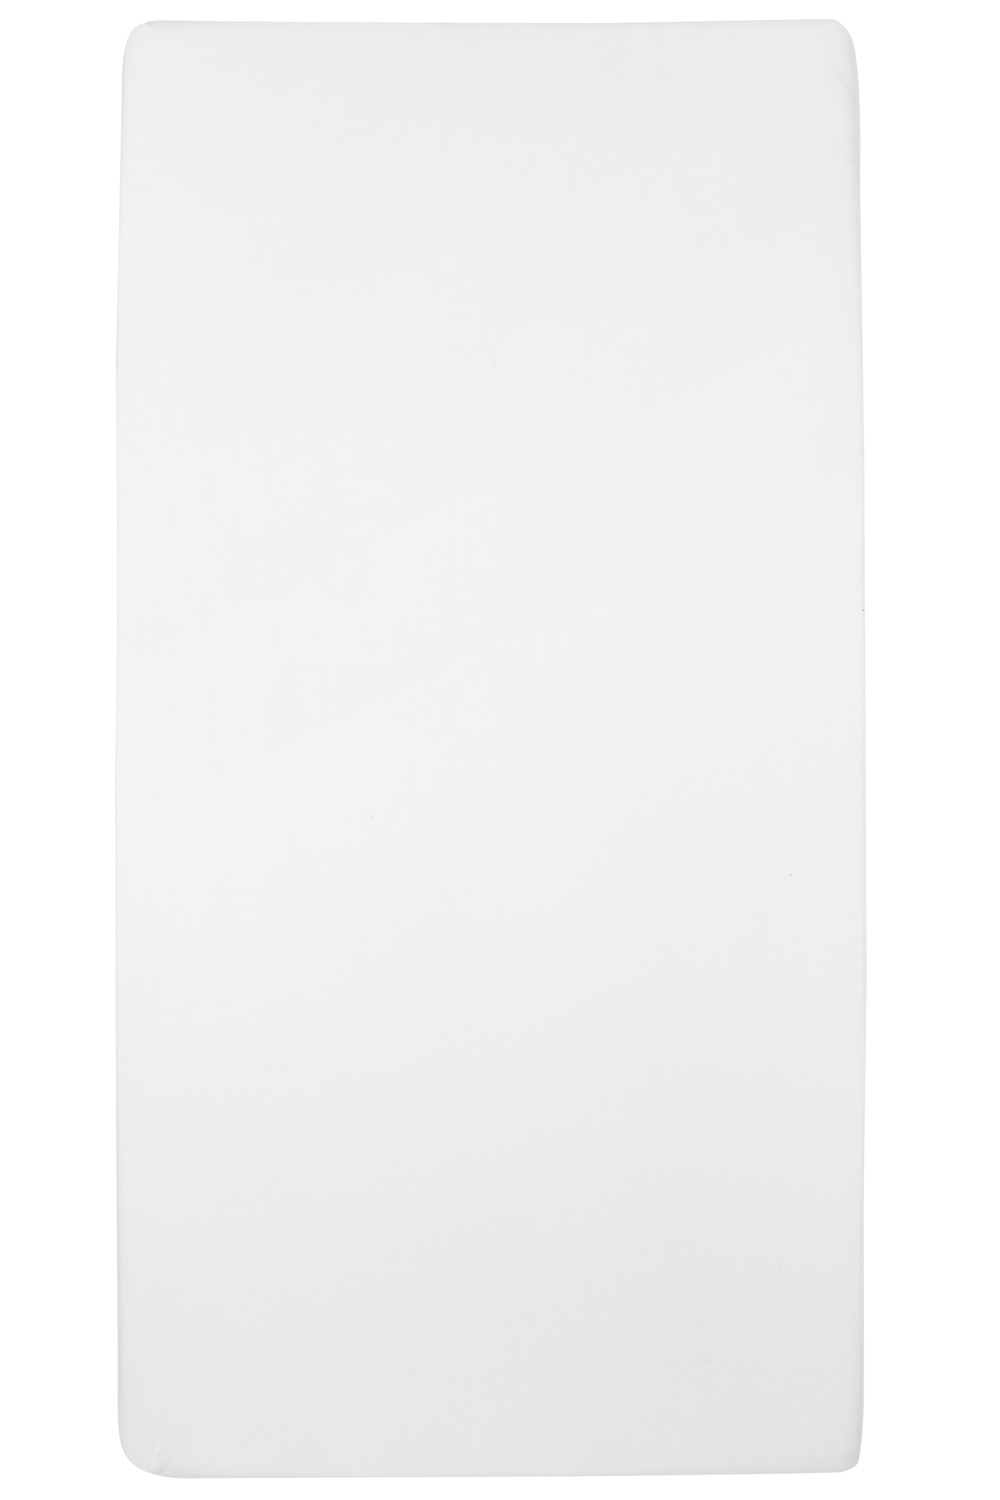 Hoeslaken tweepersoons Uni - white - 160x200cm